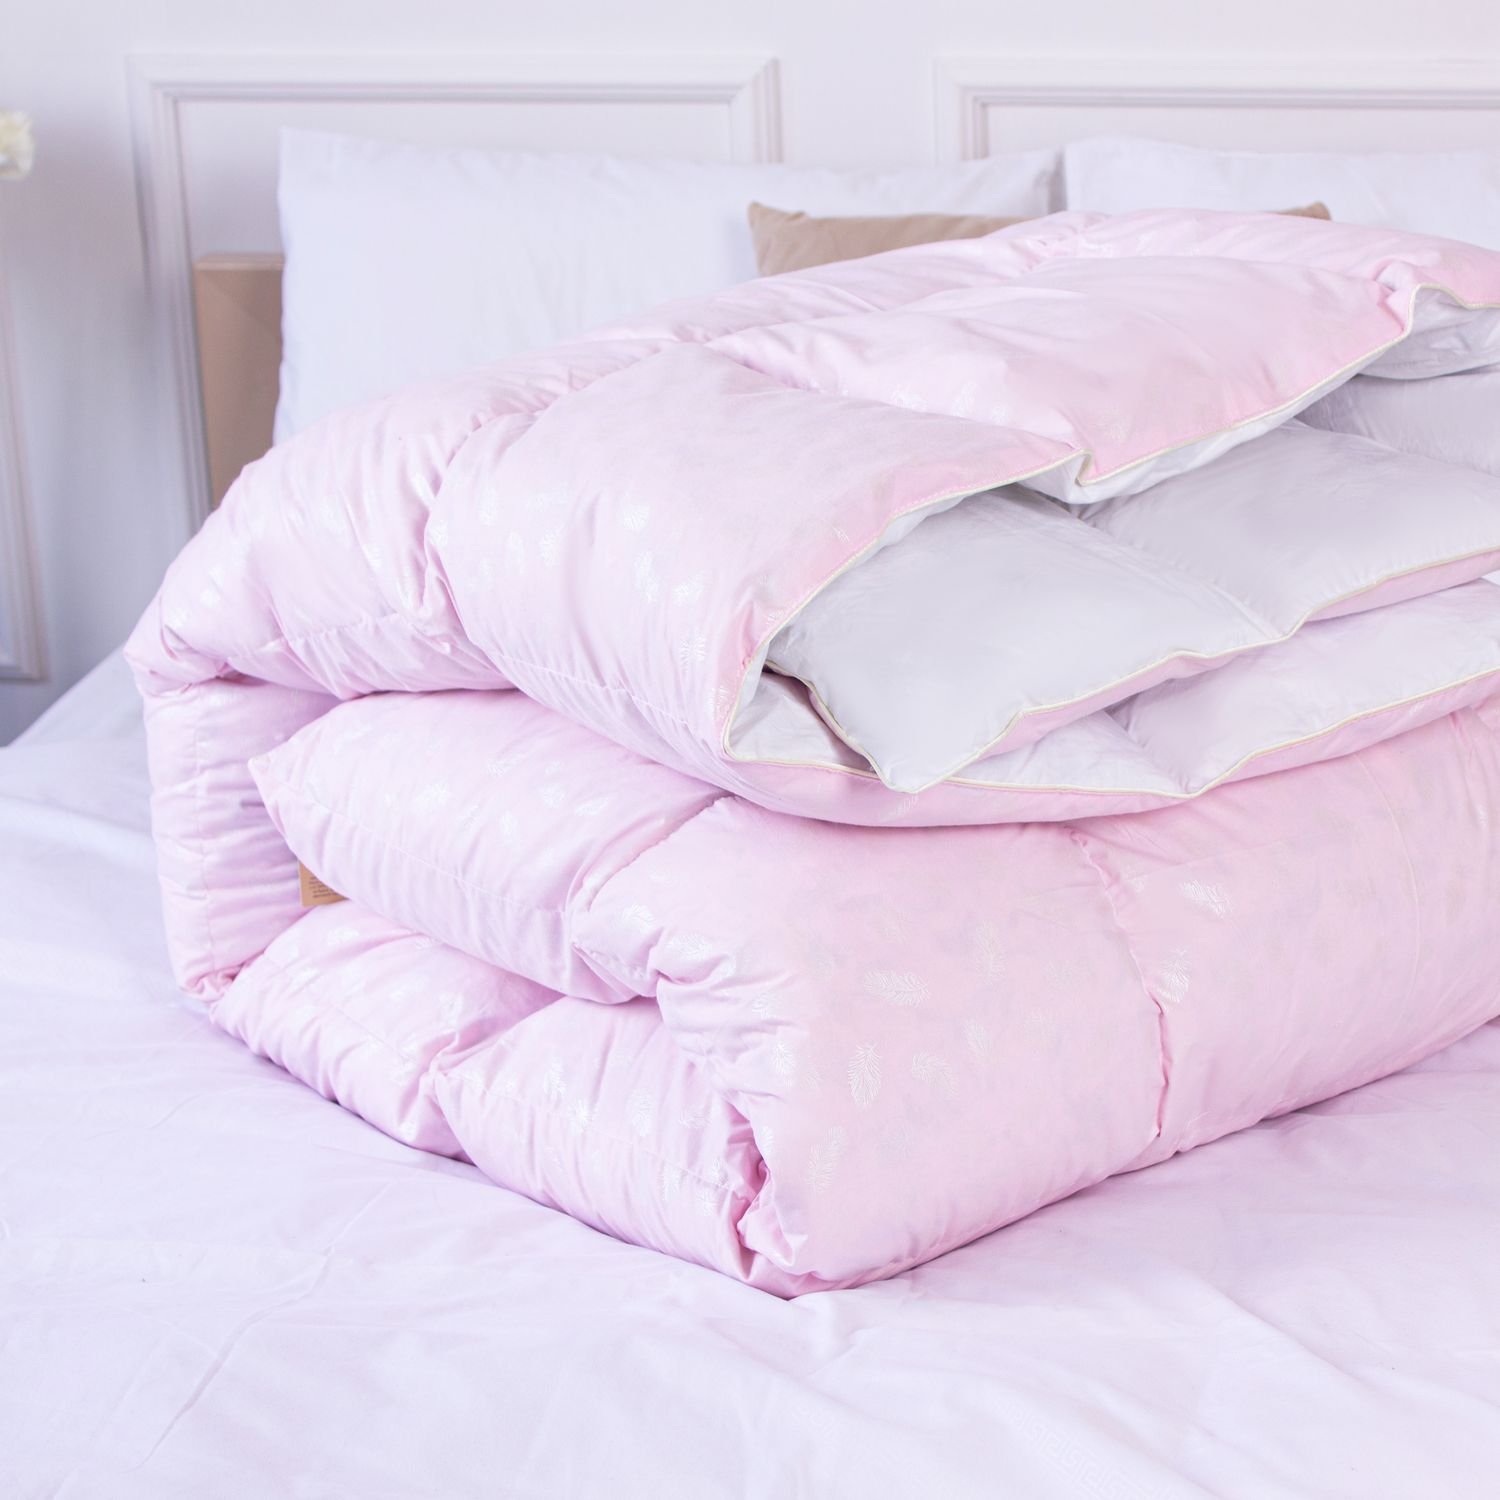 Одеяло пуховое MirSon Karmen №1838 Bio-Pink, 90% пух, полуторное, 205x140, розовое (2200003013481) - фото 3